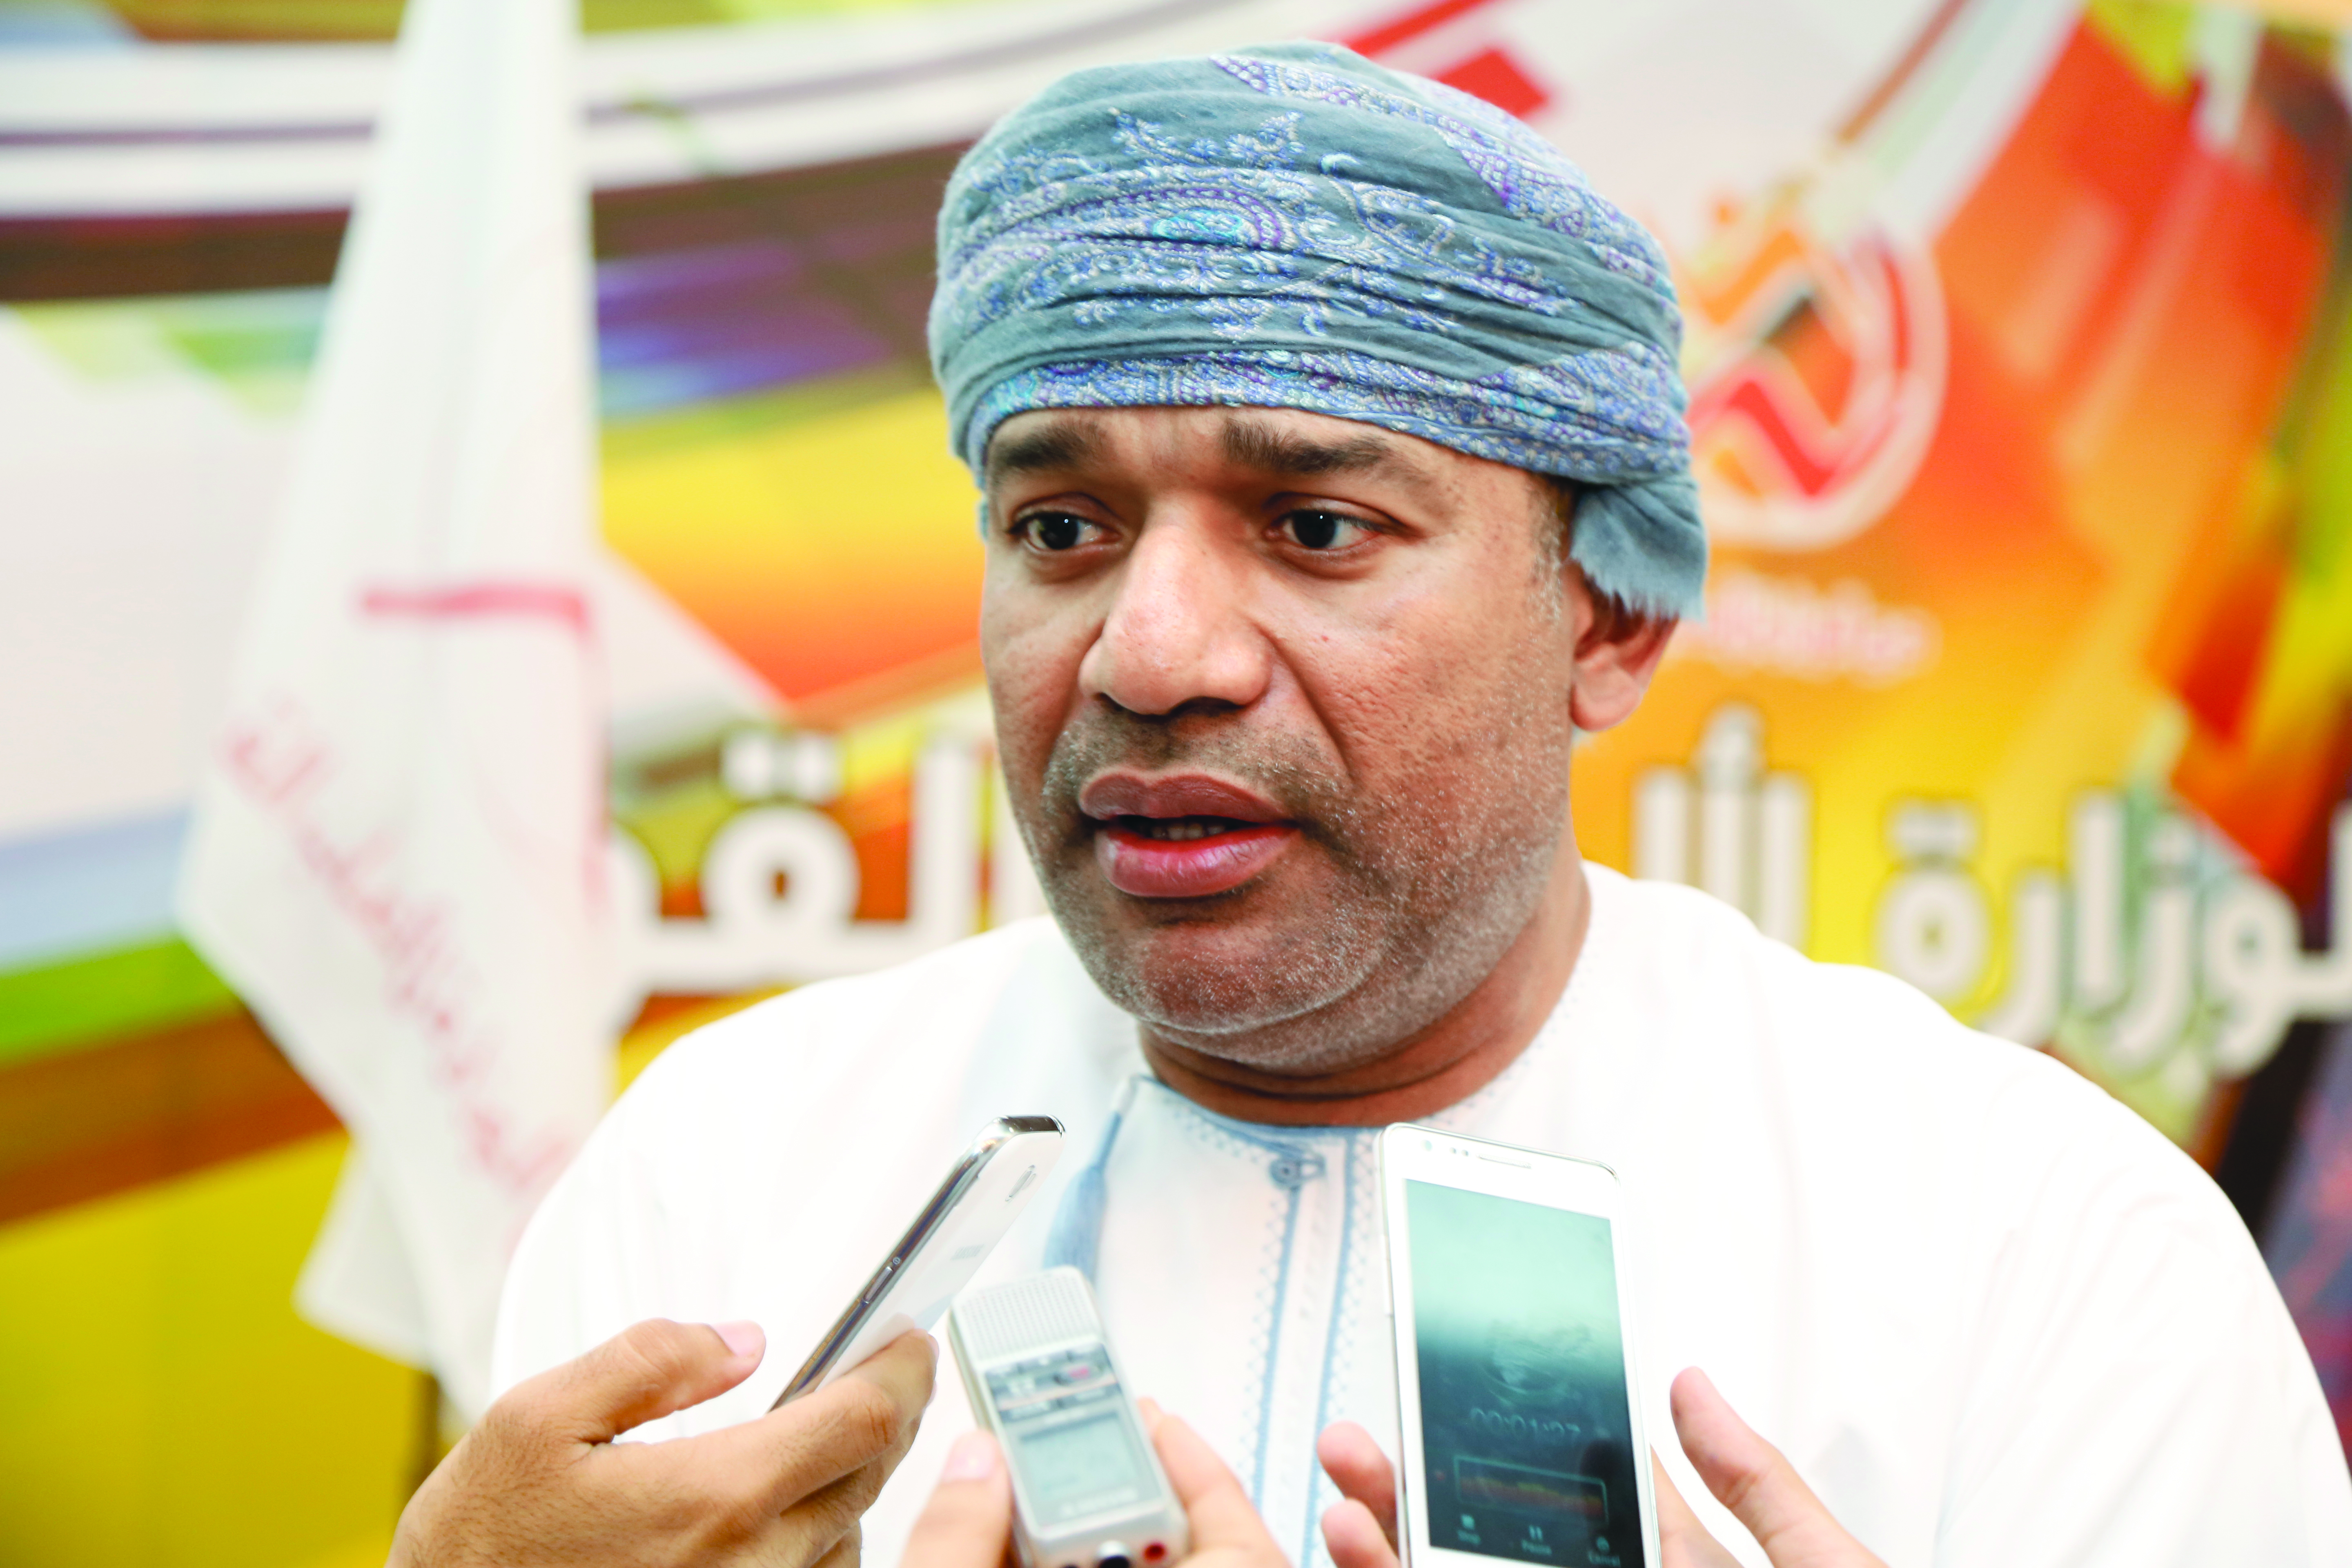 Taha Al Kishry to seek another term as Oman Swimming Association chairman